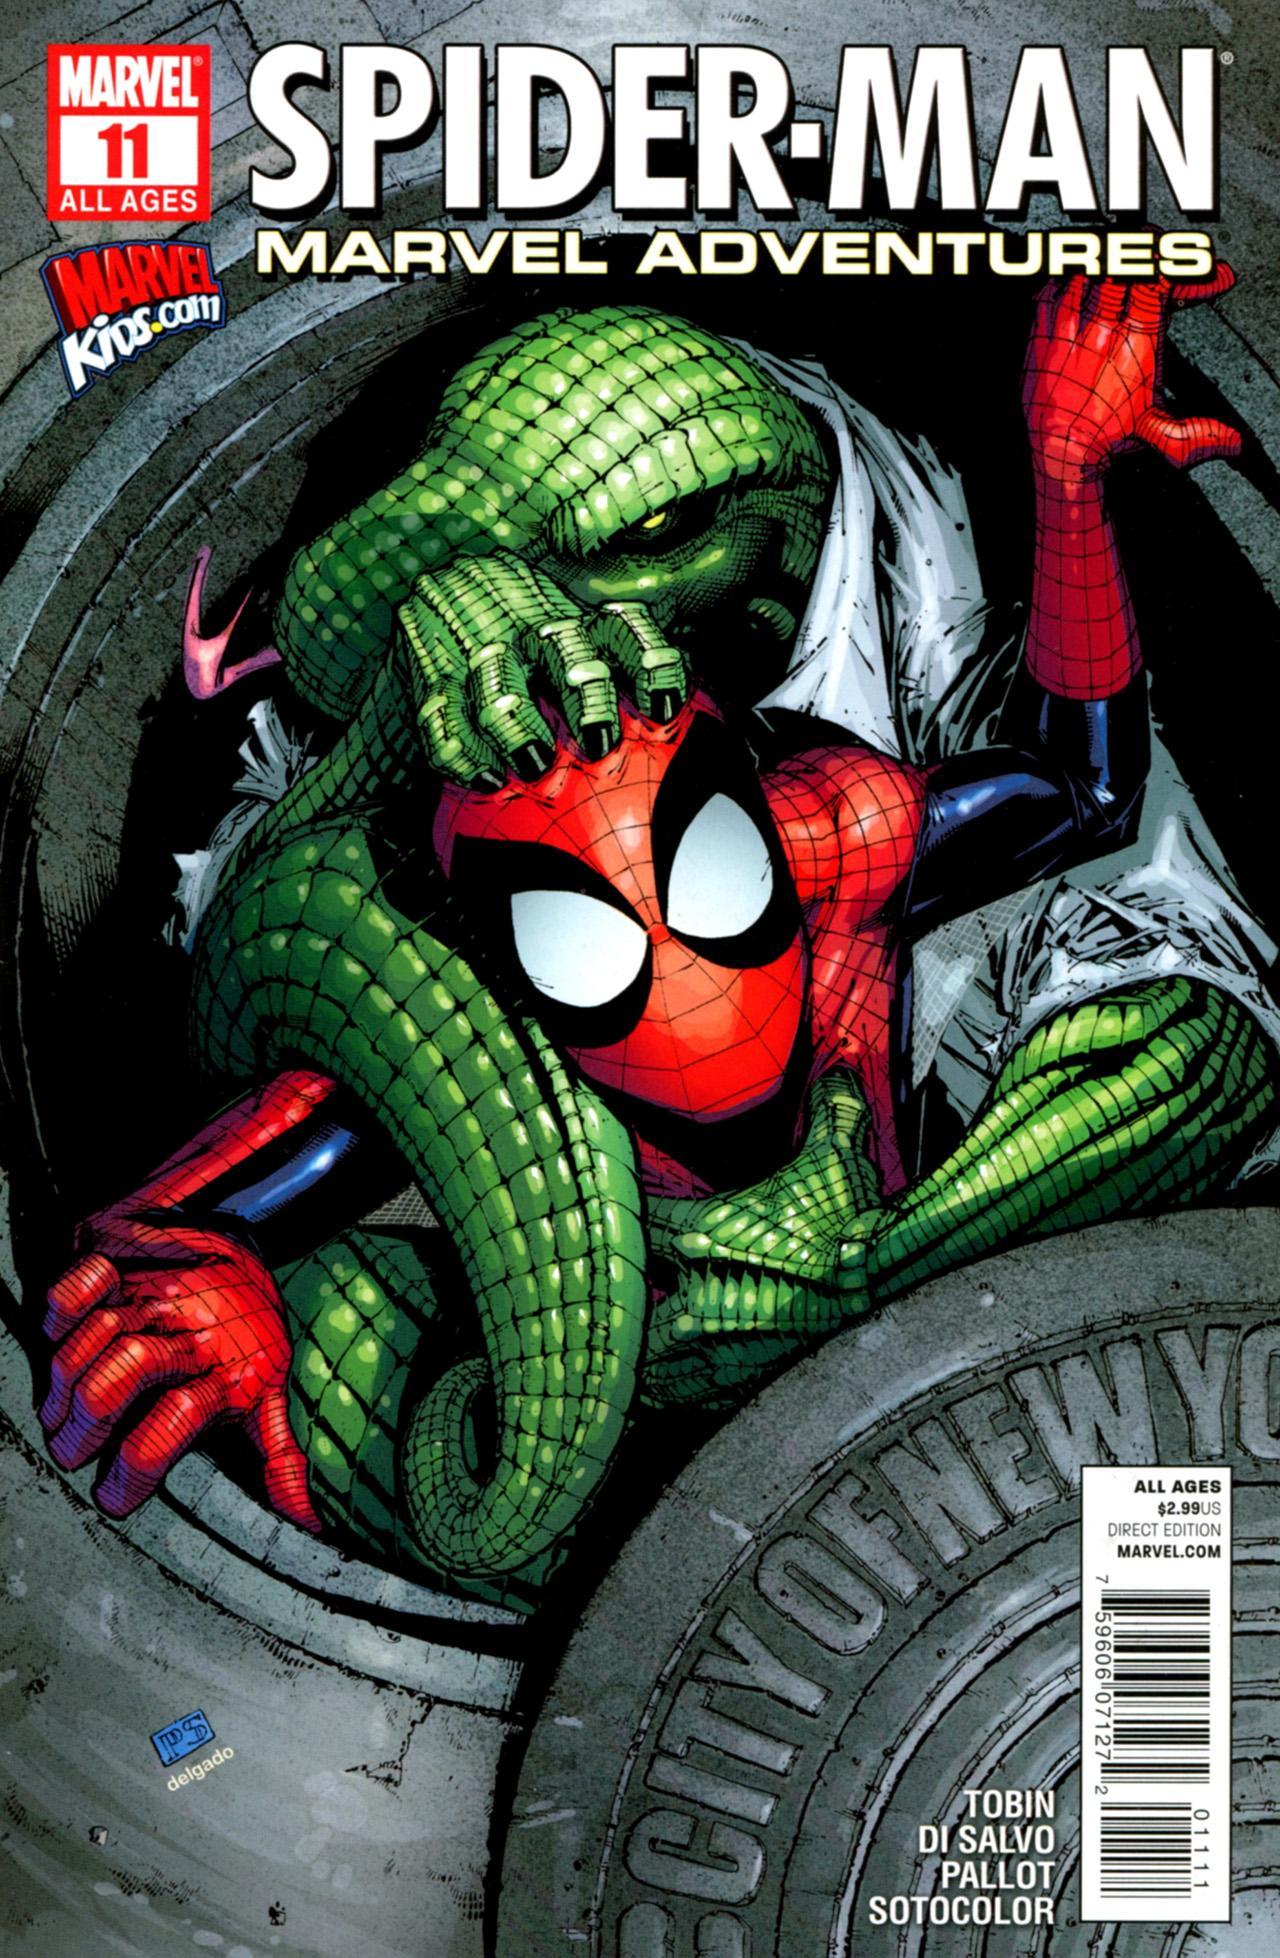 Marvel Adventures: Spider-Man Vol. 2 #11